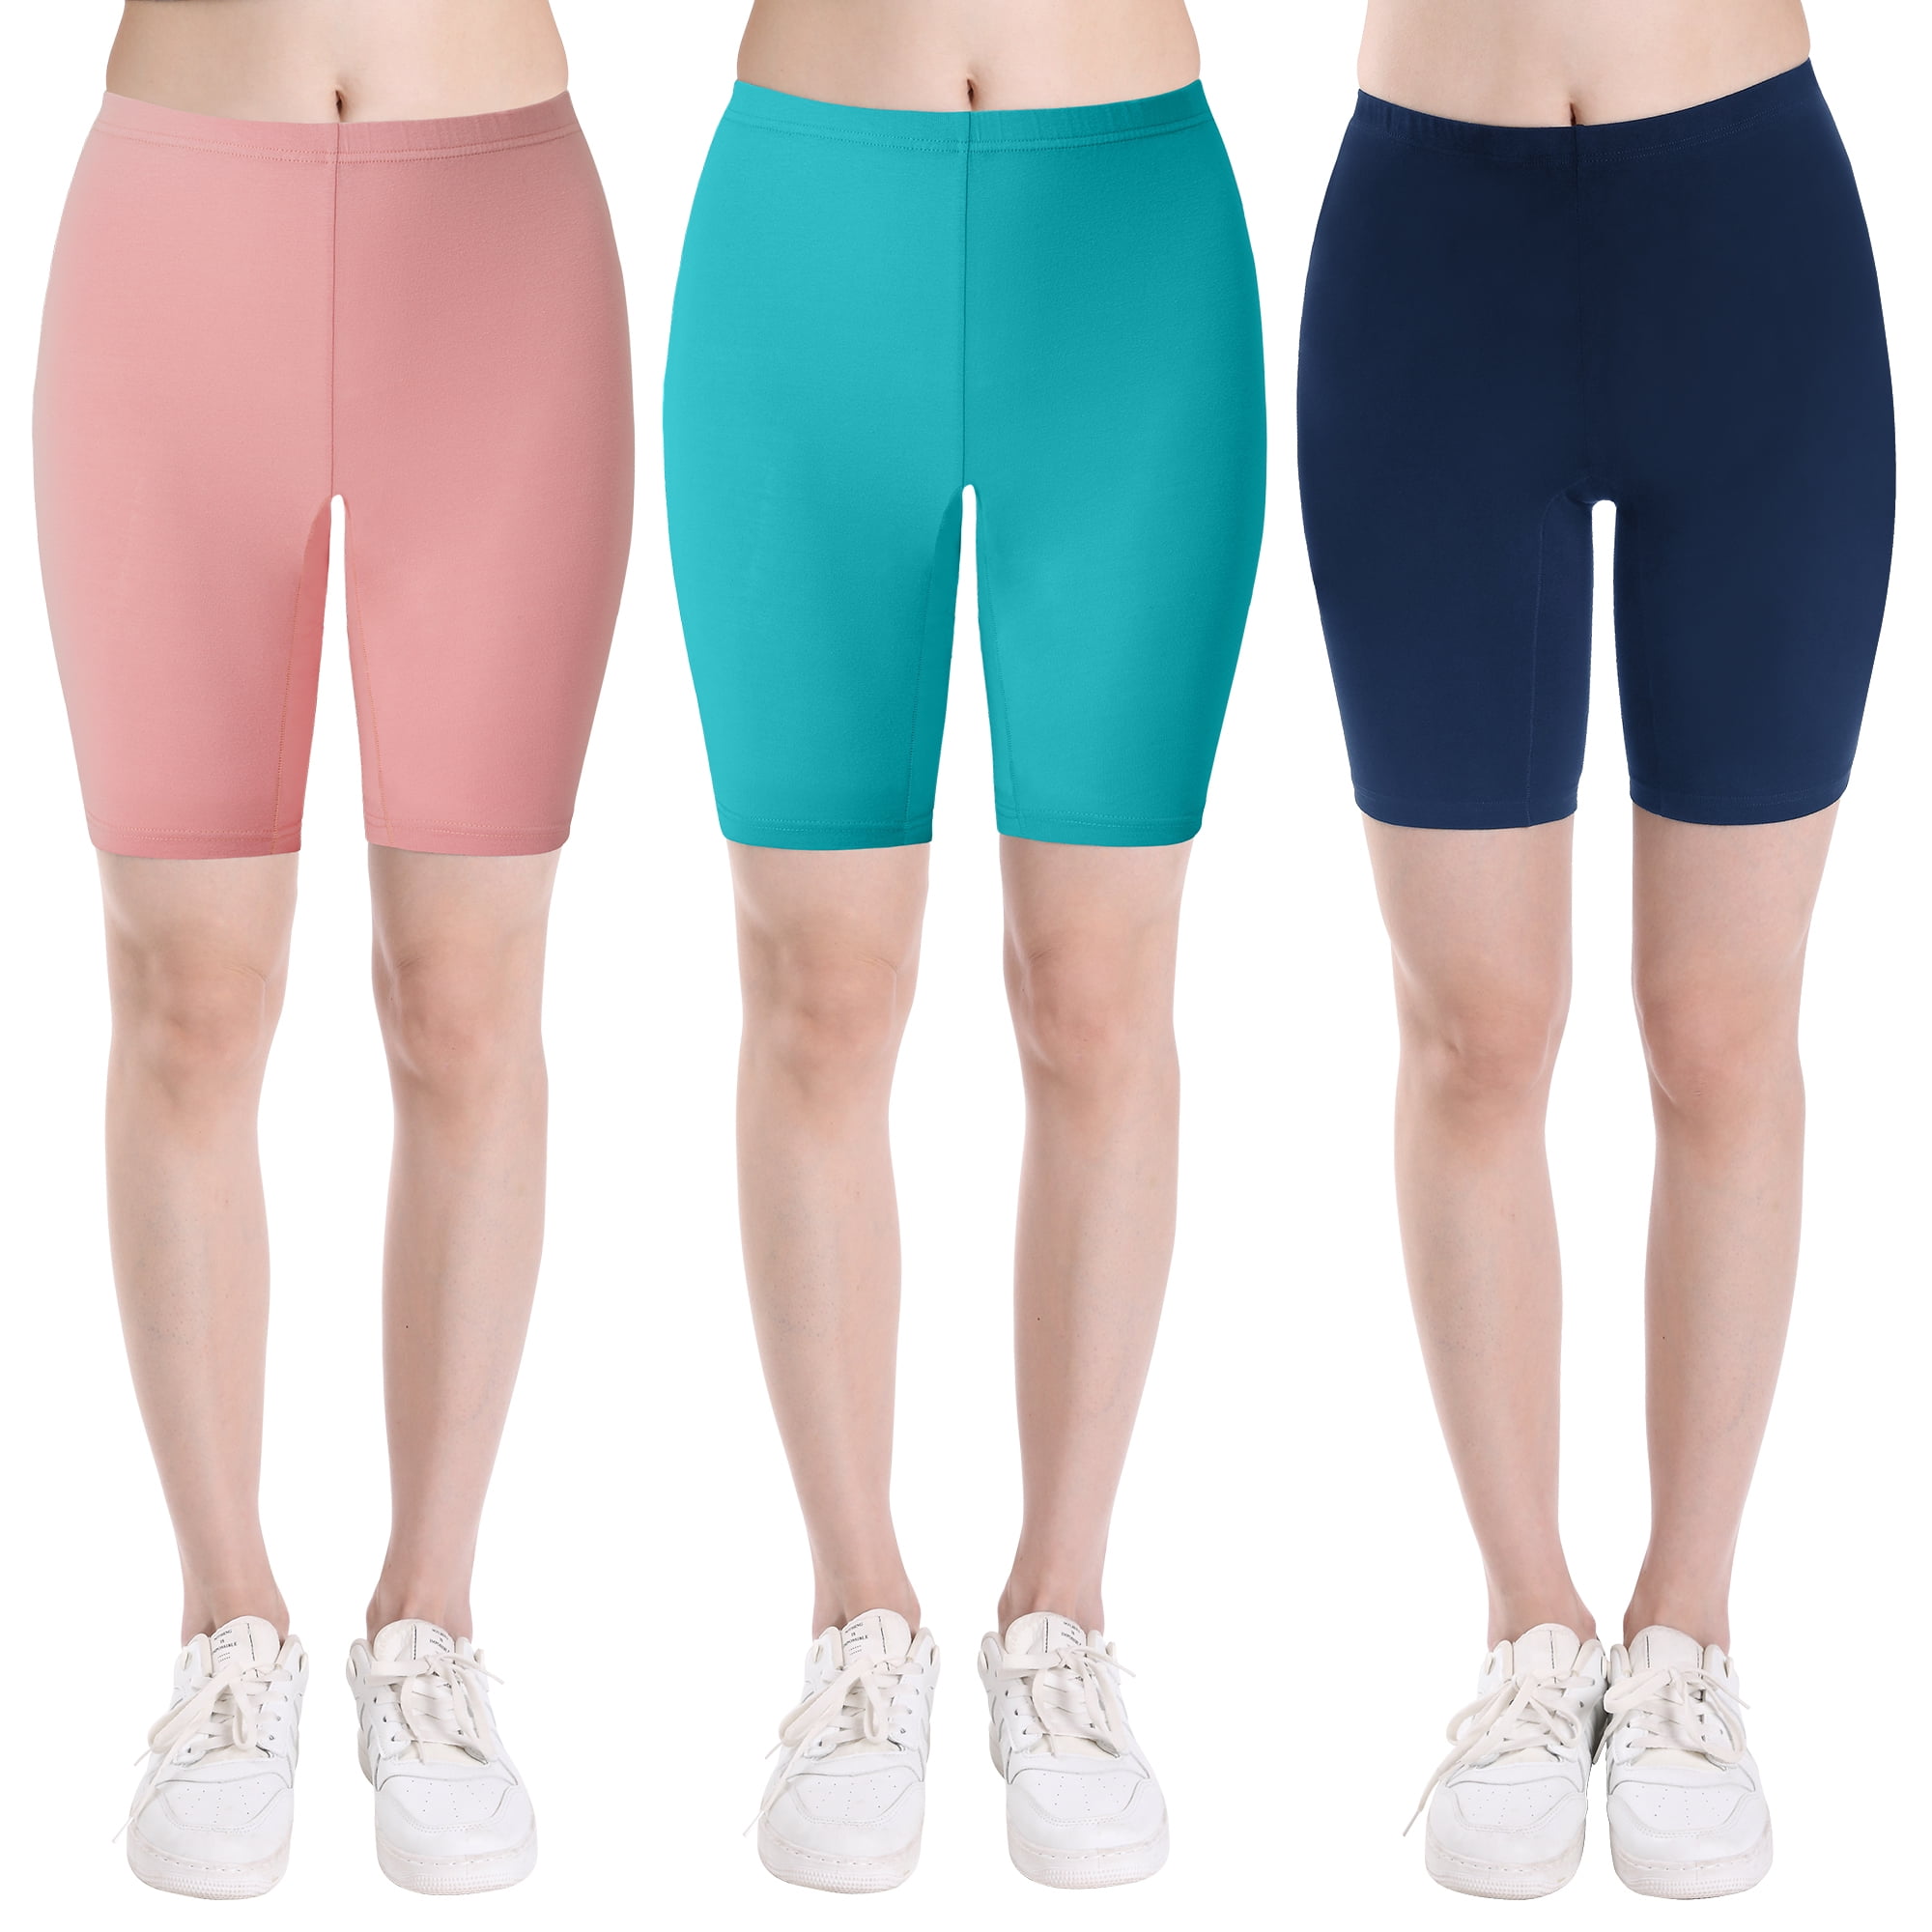 INNERSY Slip Shorts for Under Dresses Teen Girls Panties Cotton